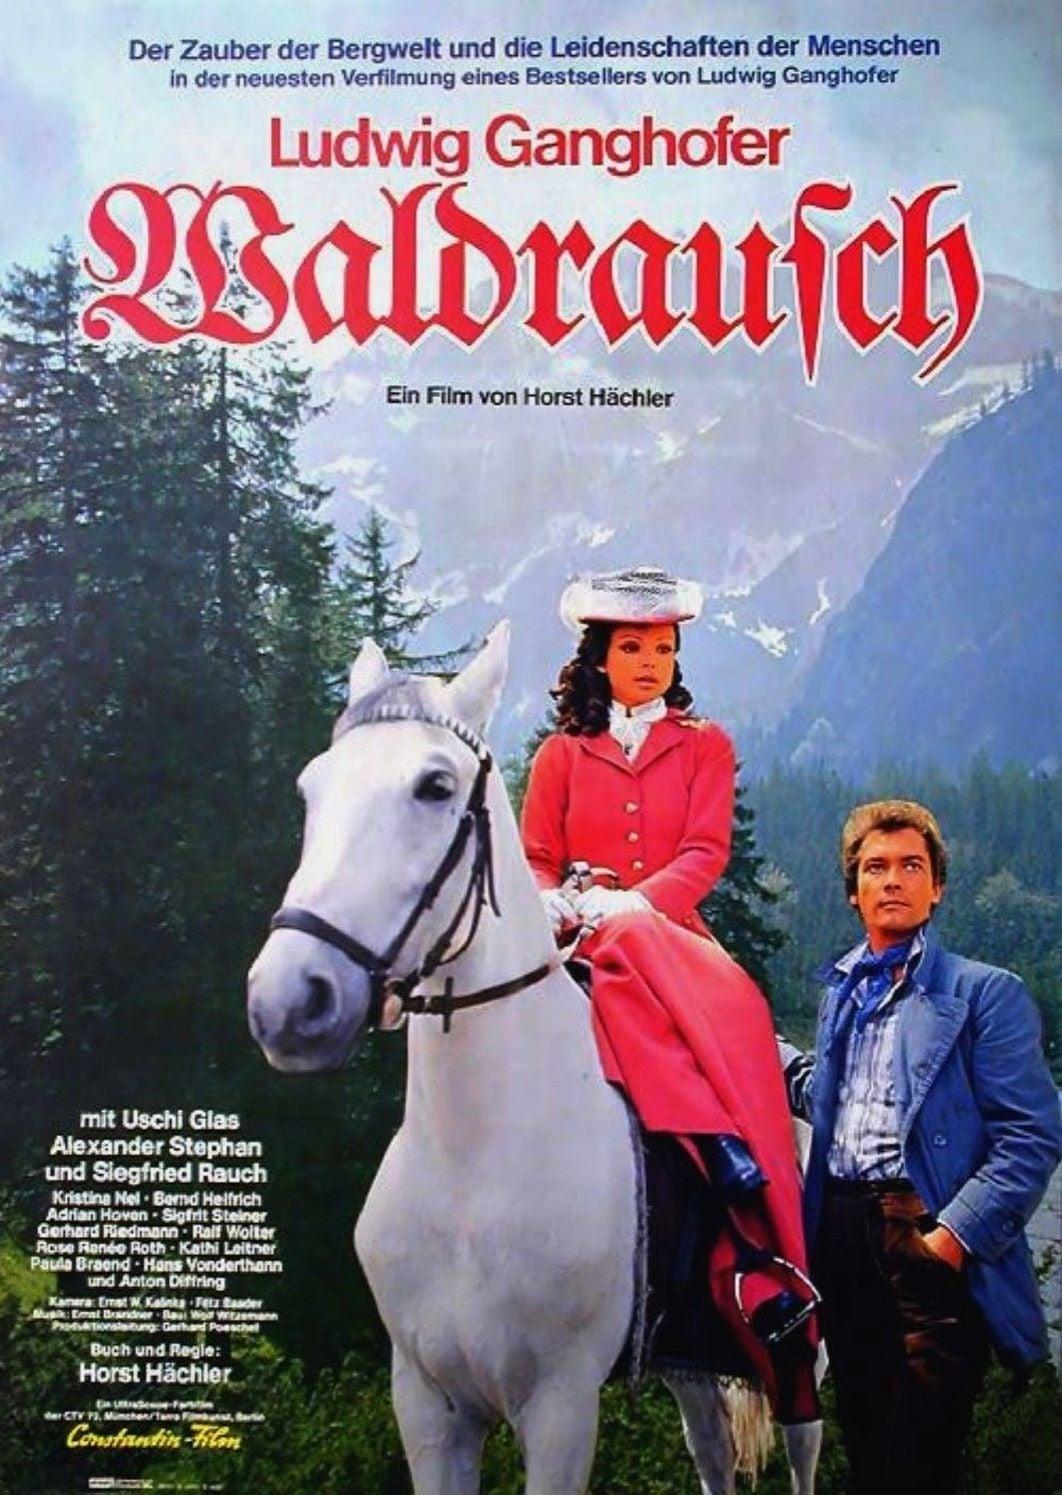 Waldrausch poster